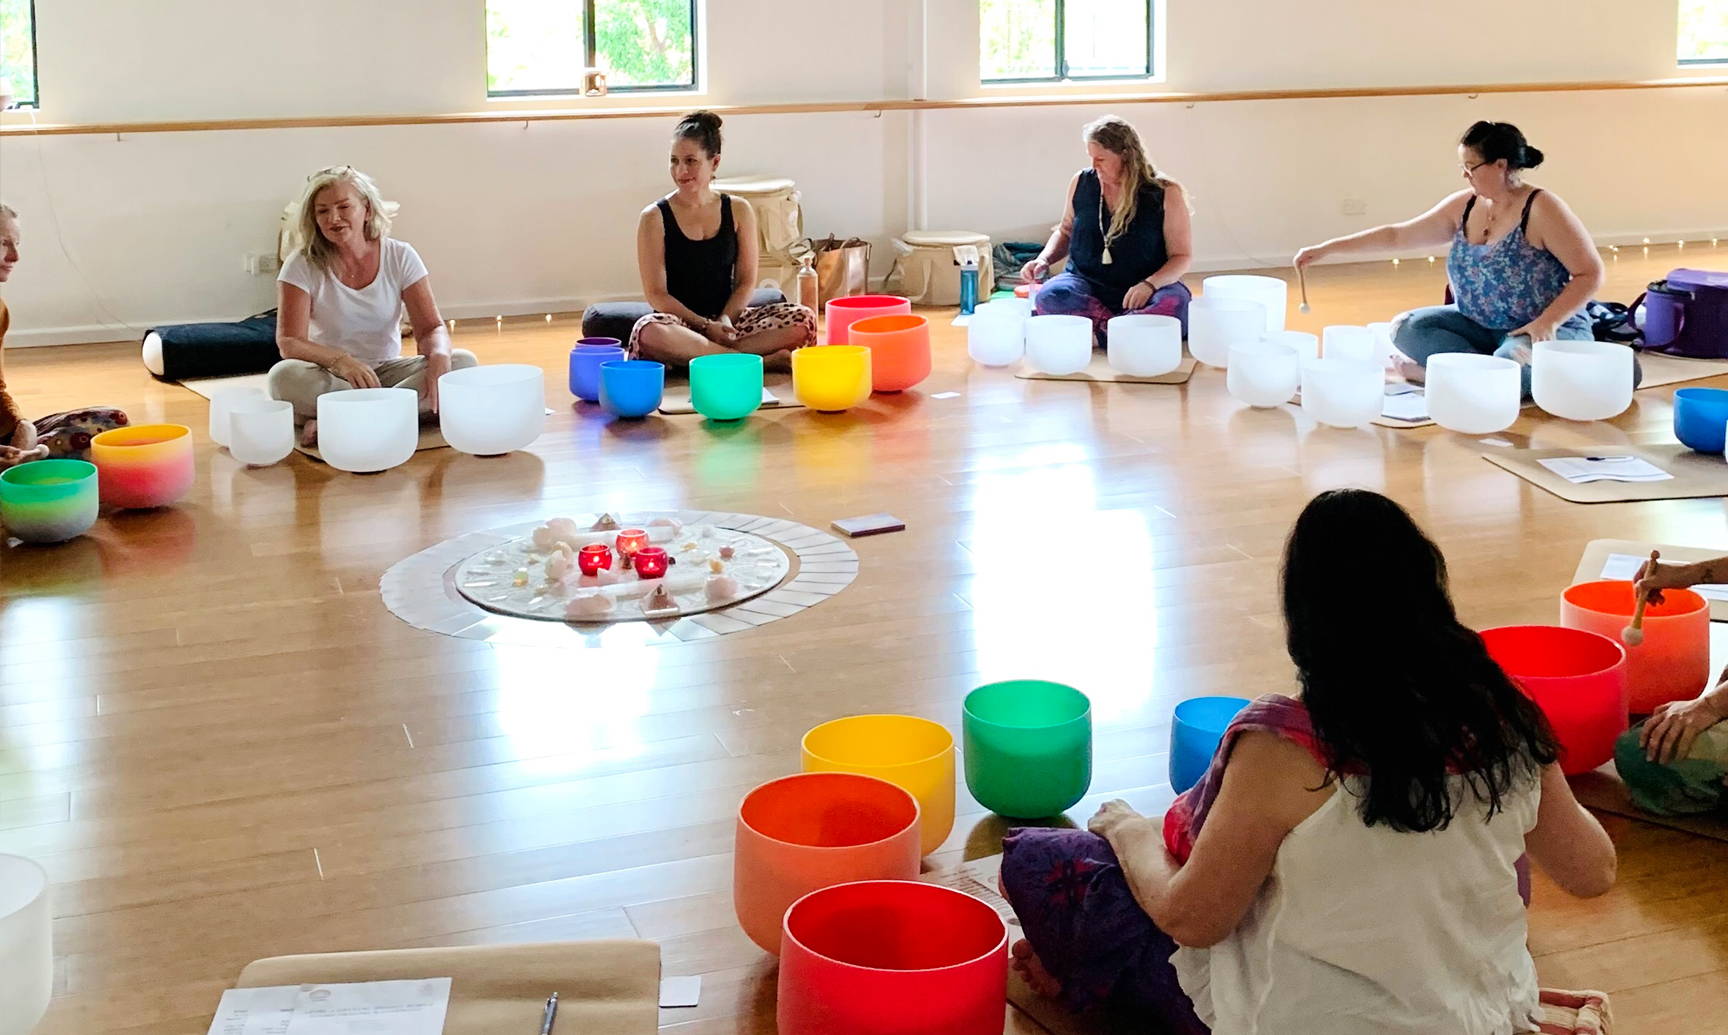 Rainbow Sounds Crystal Singing Bowls Workshops coming to Torquay and Mornington Peninsula